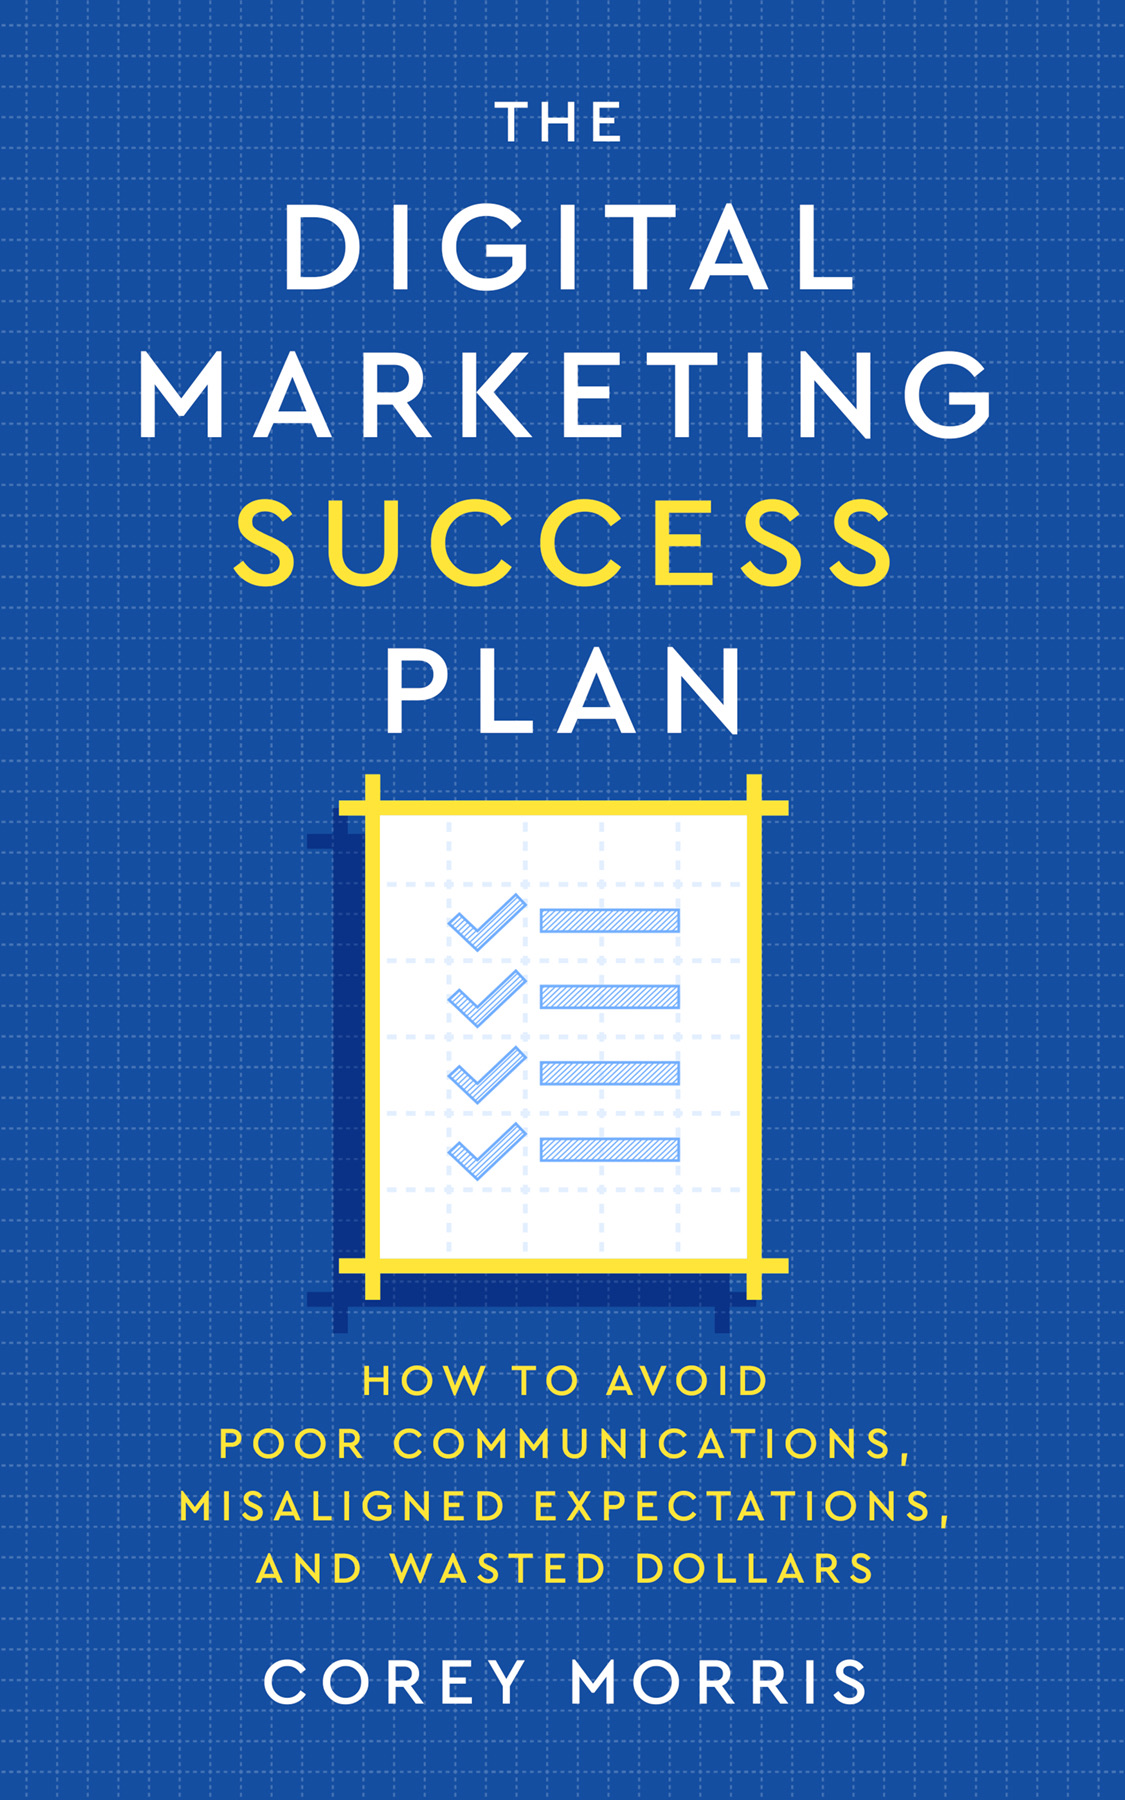 Digital Marketing Success Plan book cover